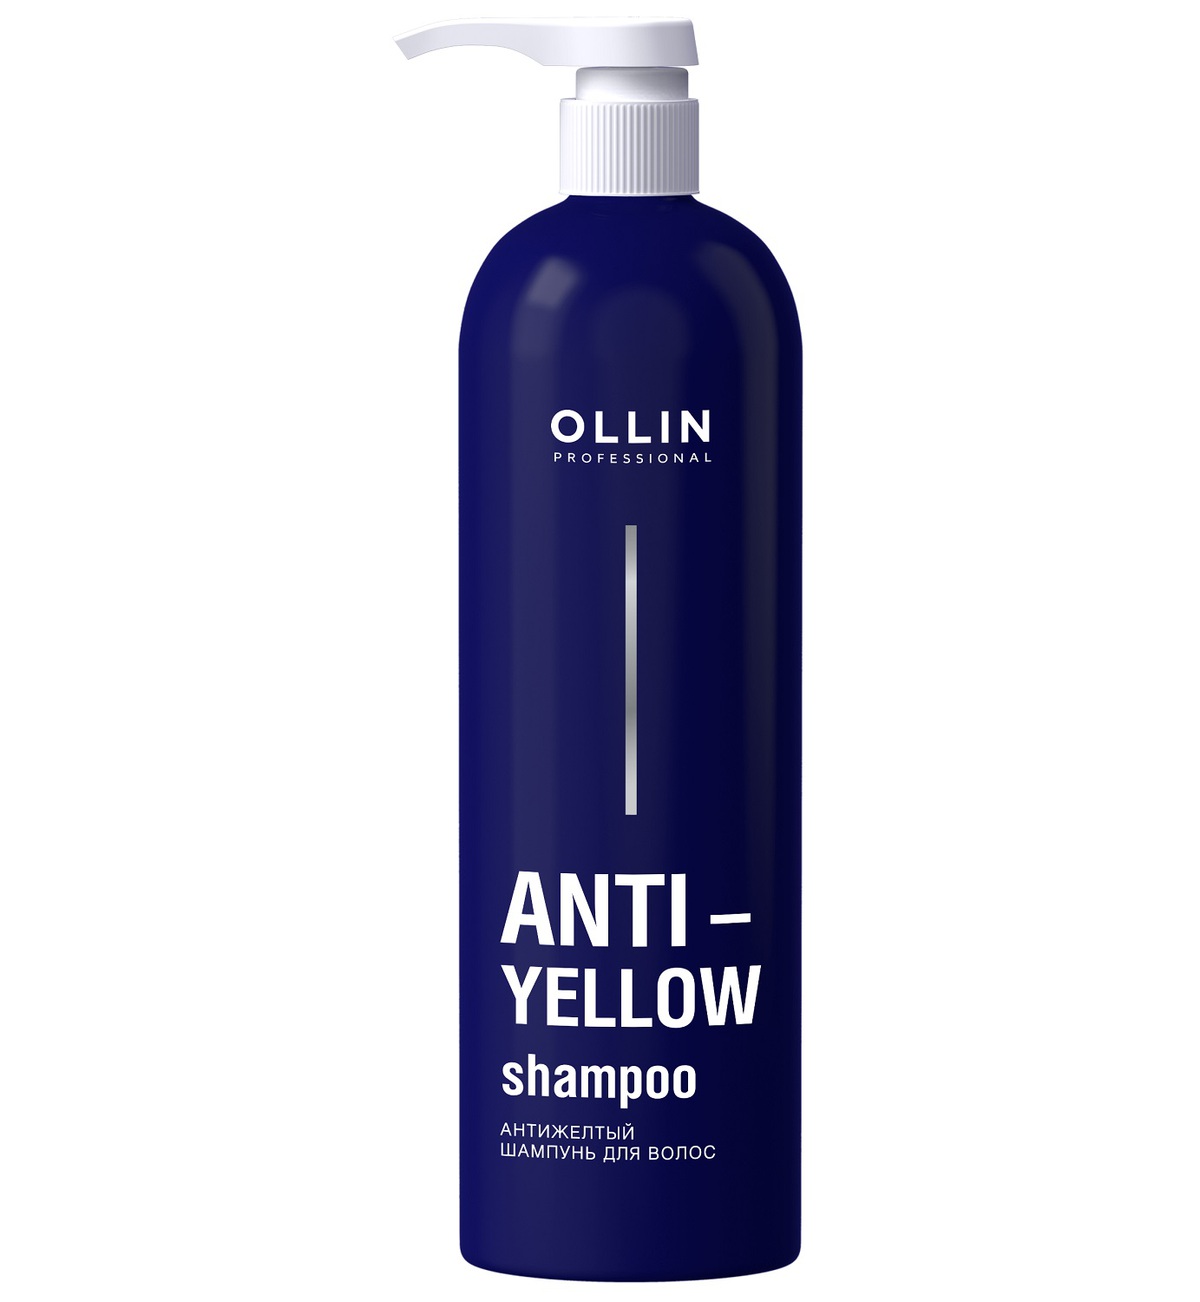 Ollin Professional Антижелтый шампунь для волос Anti-Yellow Shampoo, 500 мл (Ollin Professional, Anti-Yellow) цена и фото